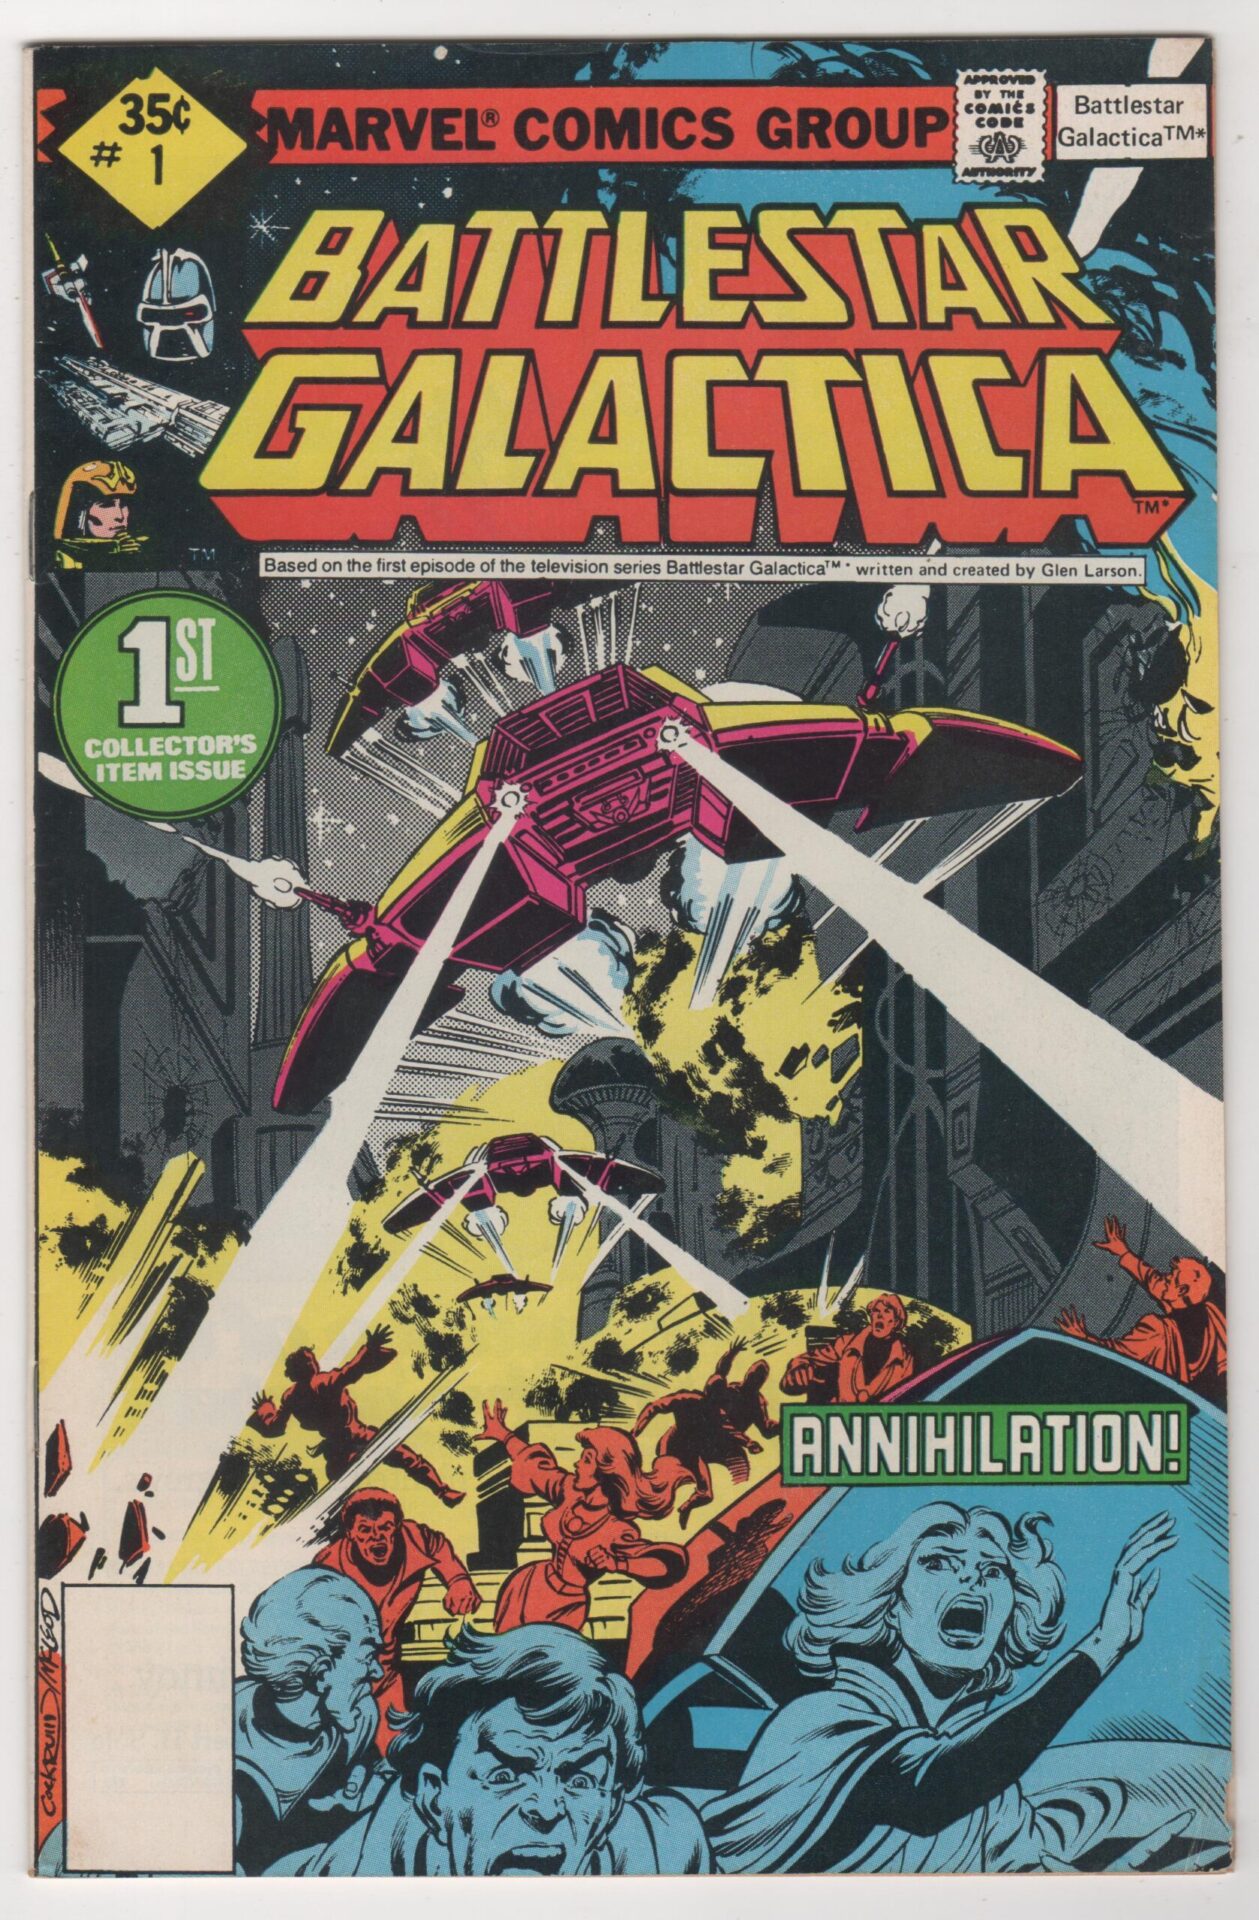 Battlestar Galactica #1 1979 Marvel Comics Roger McKenzie and Ernie Colon